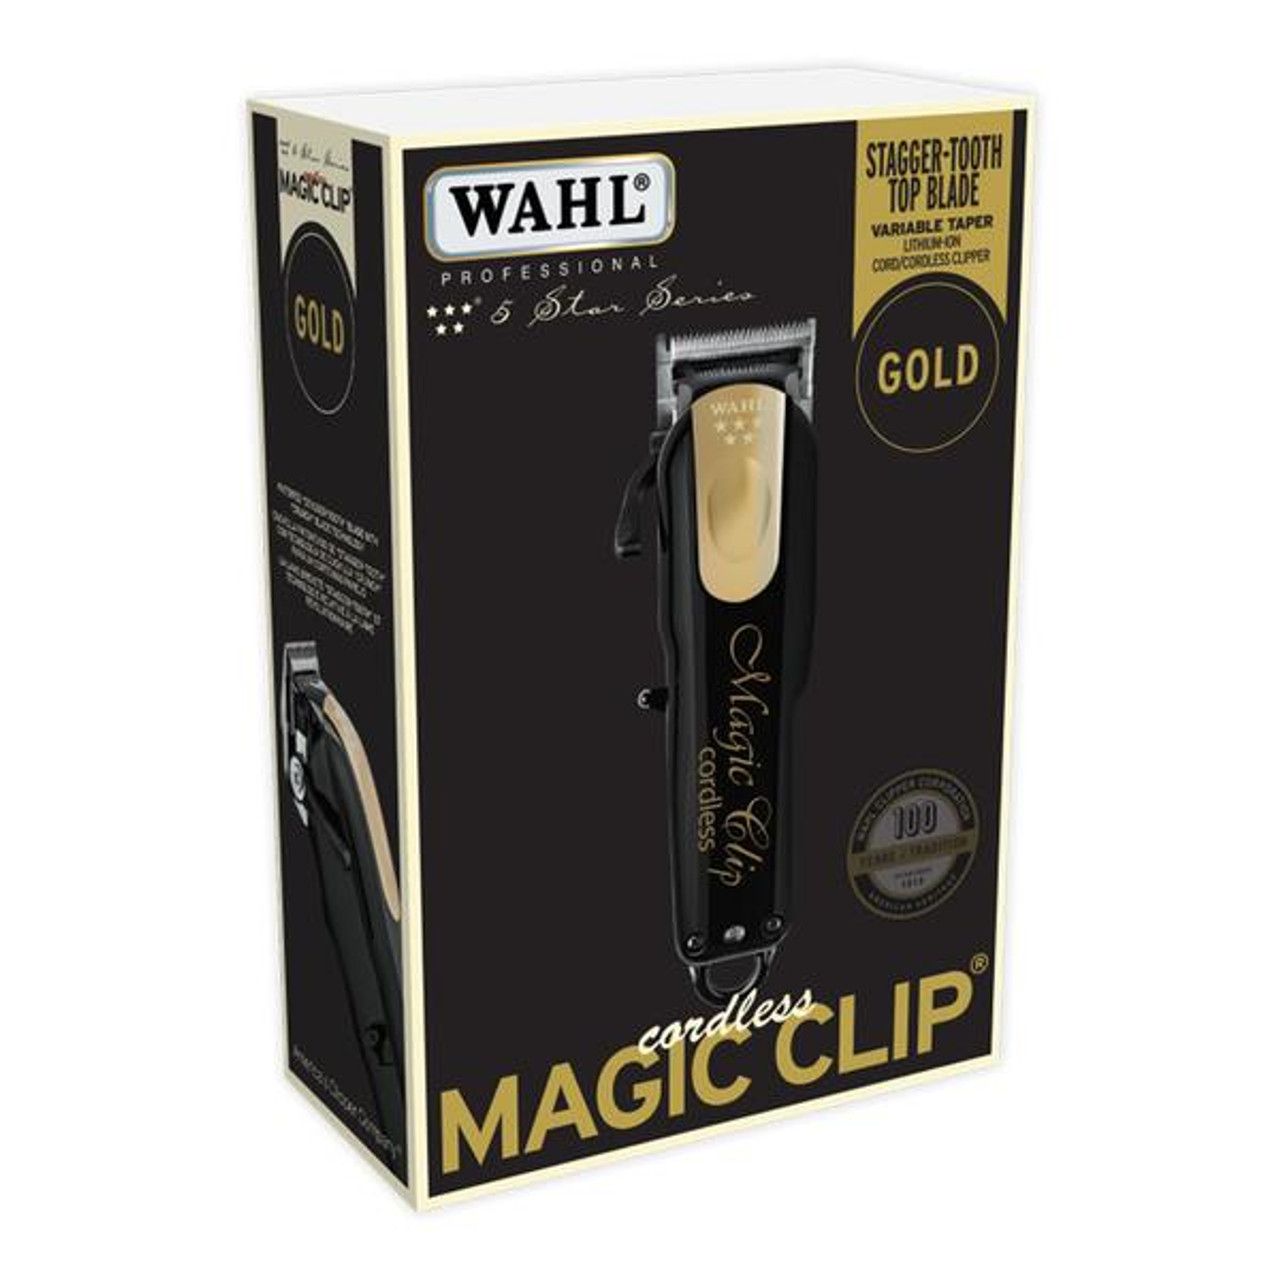 wahl magic clip cordless black & gold